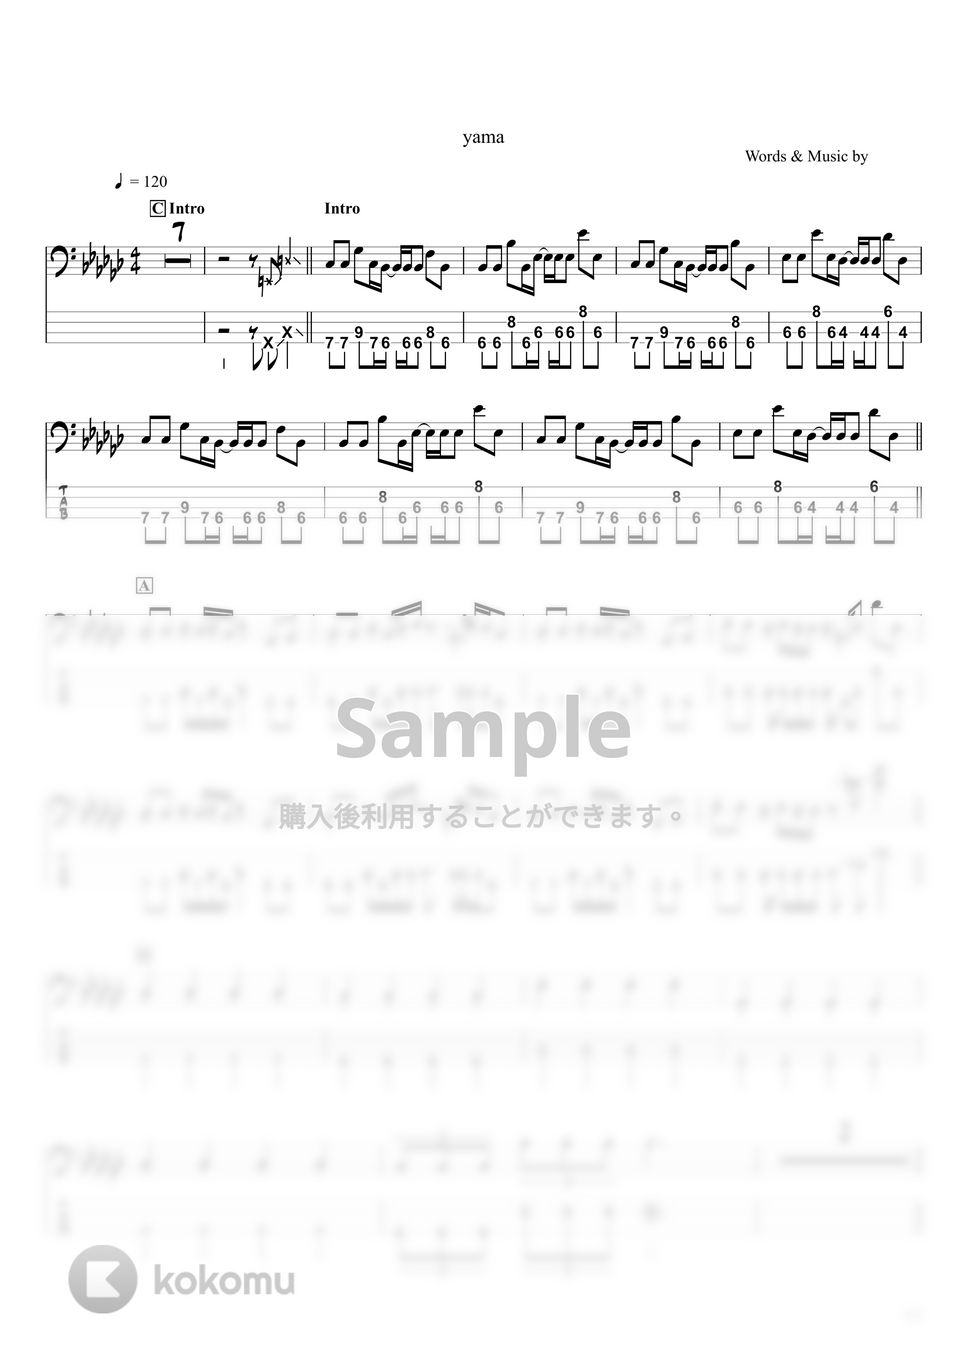 yama - 春を告げる (ベースTAB譜 / ☆4弦ベース対応) by swbass